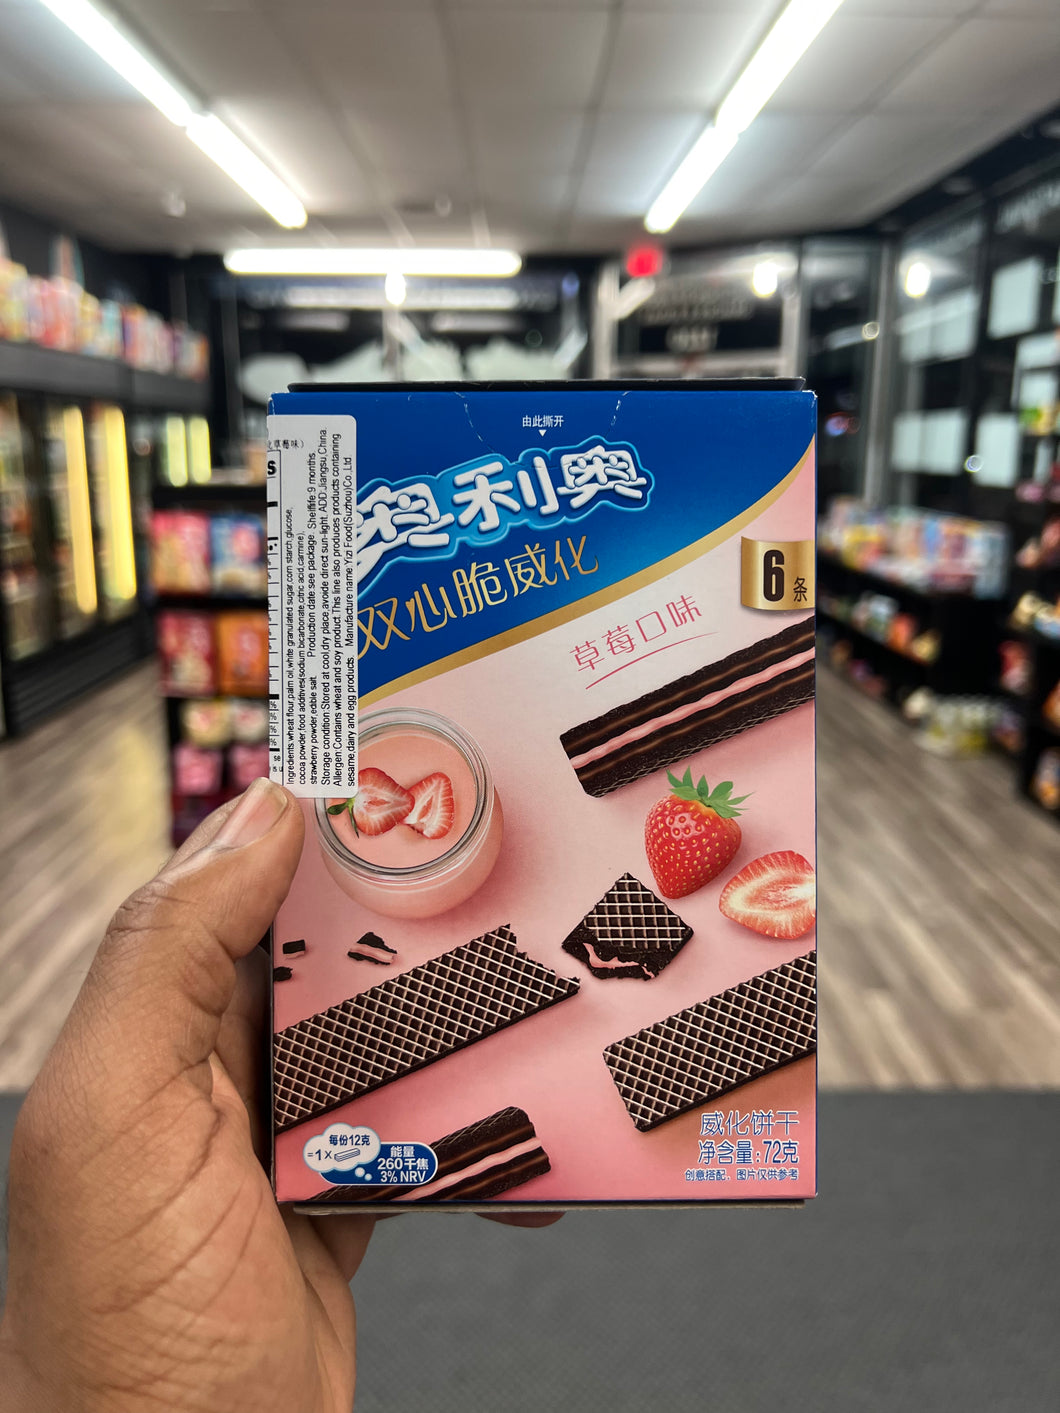 Oreo Double Crisps Vanilla Strawberry and Cream Flavor (China)